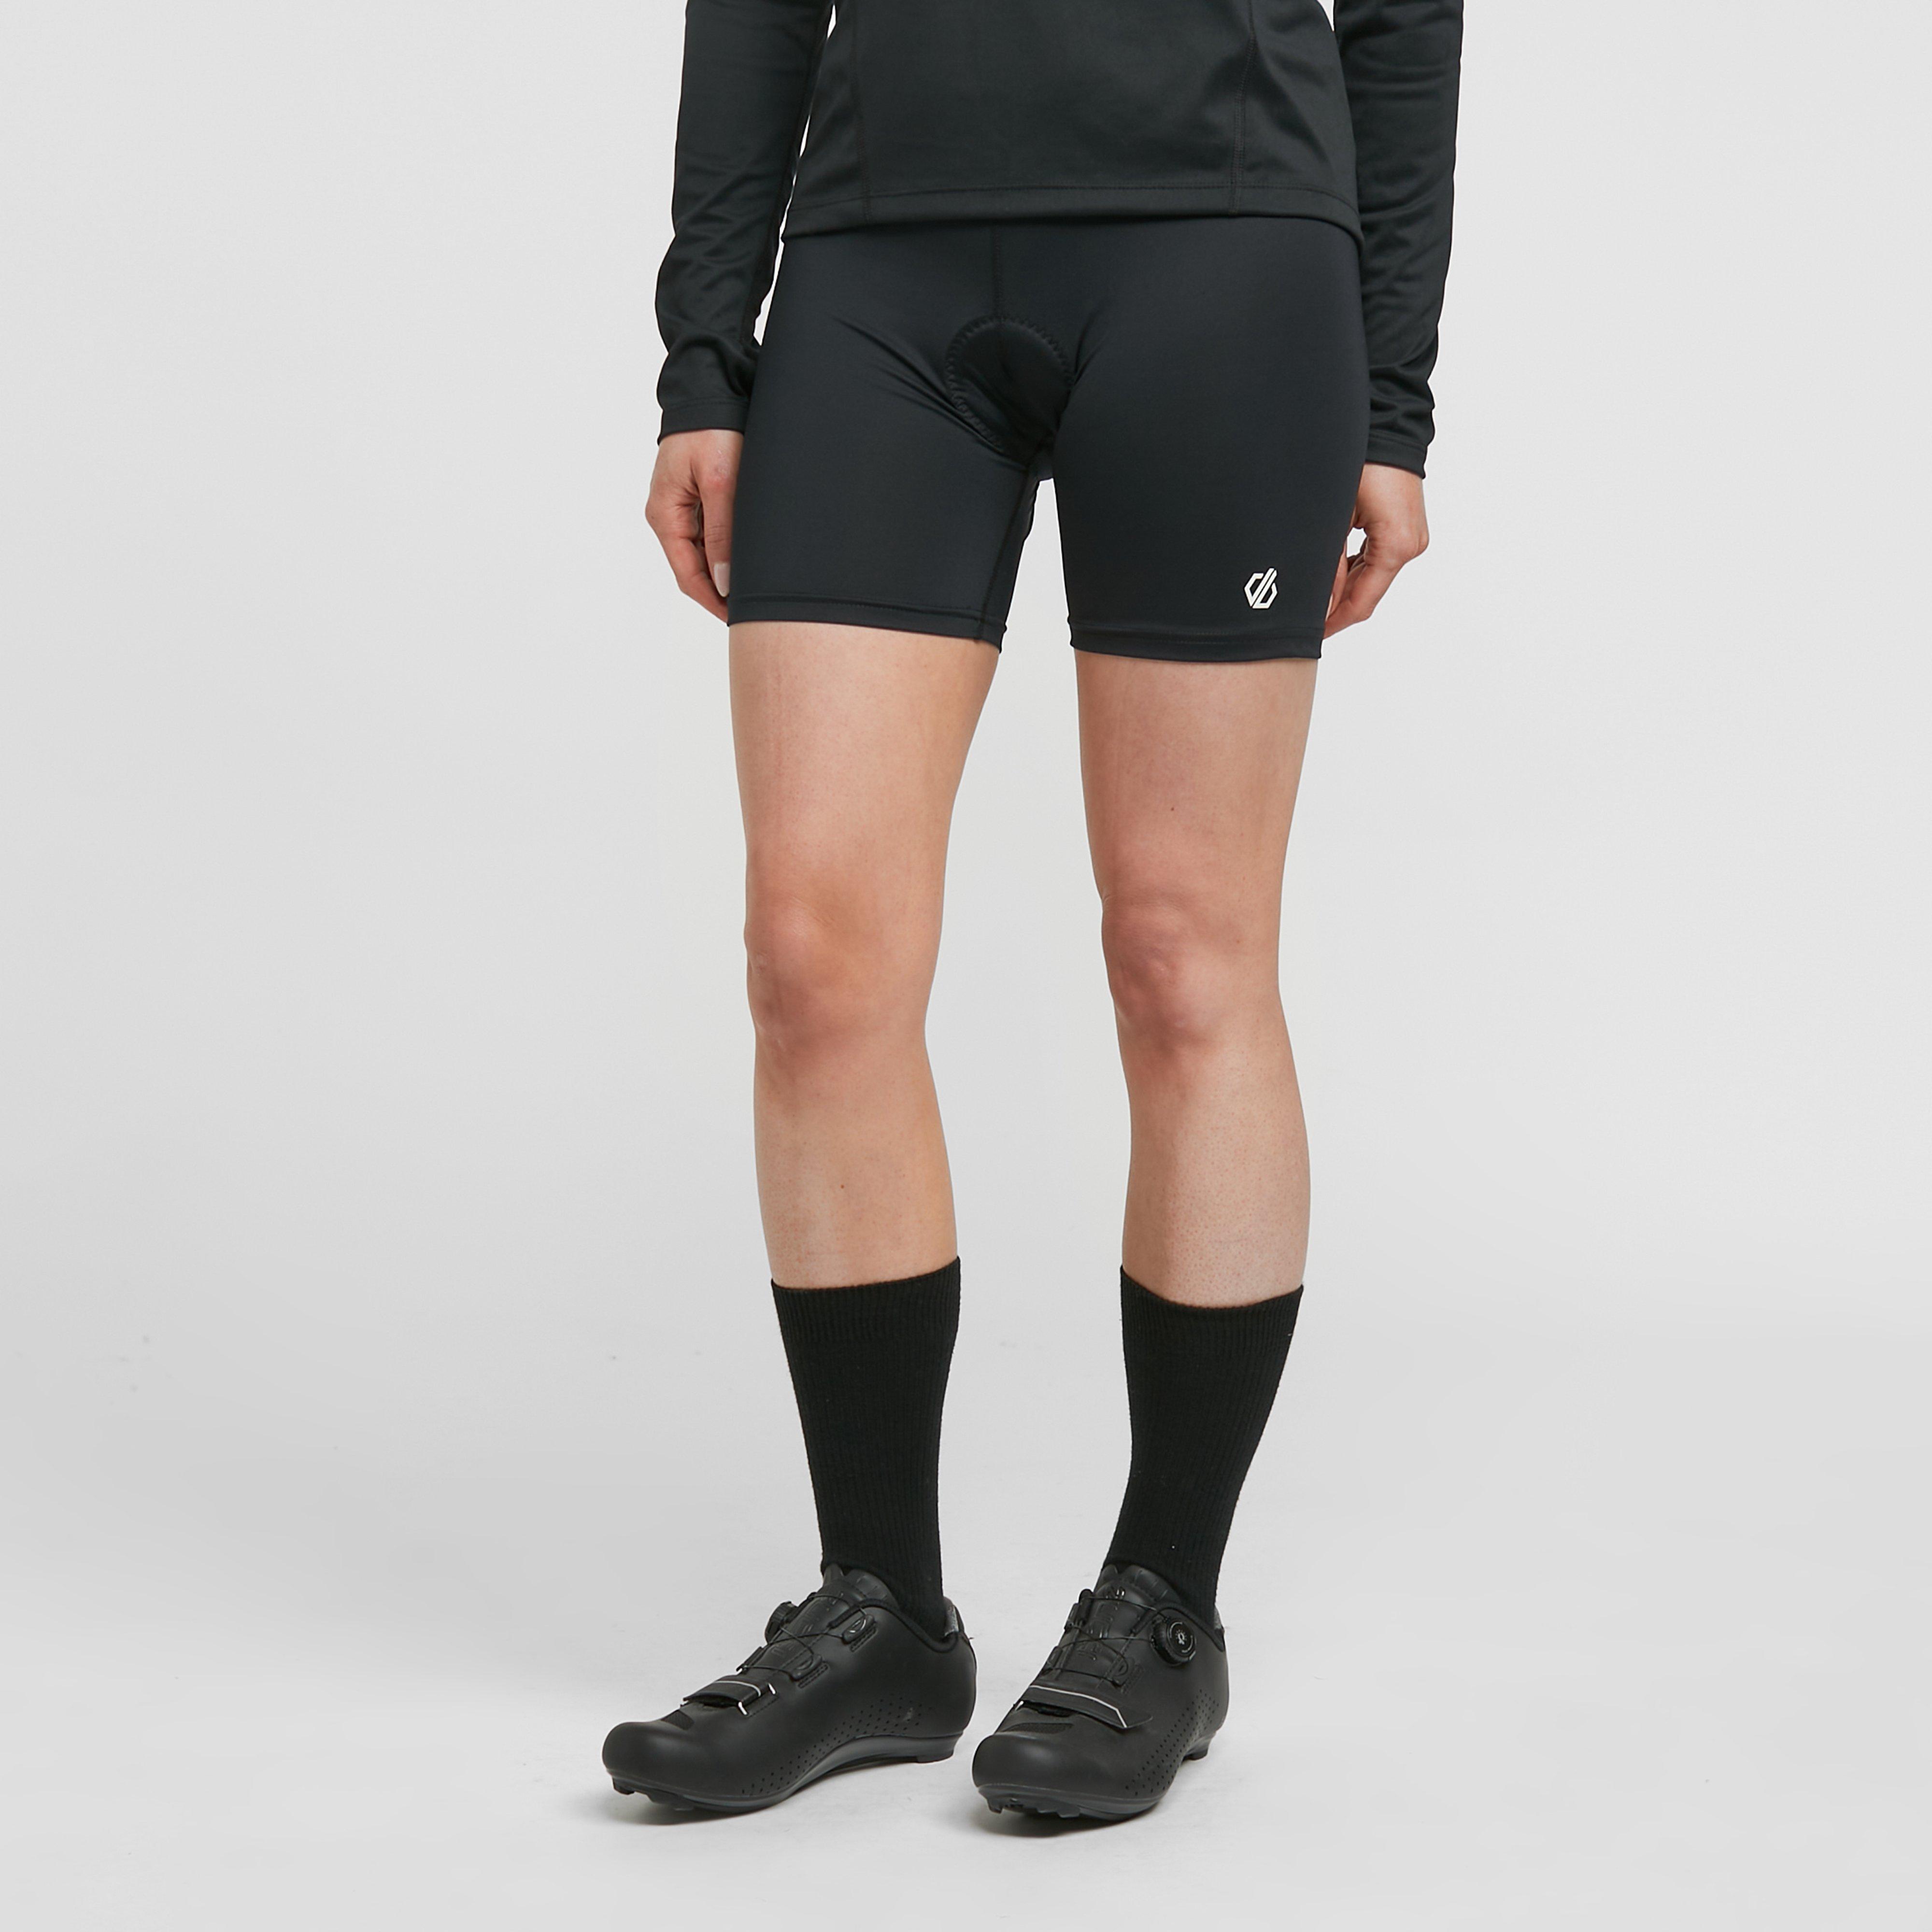 Dare 2b Womens Basic Padded Cycling Shorts - Black/blk  Black/blk